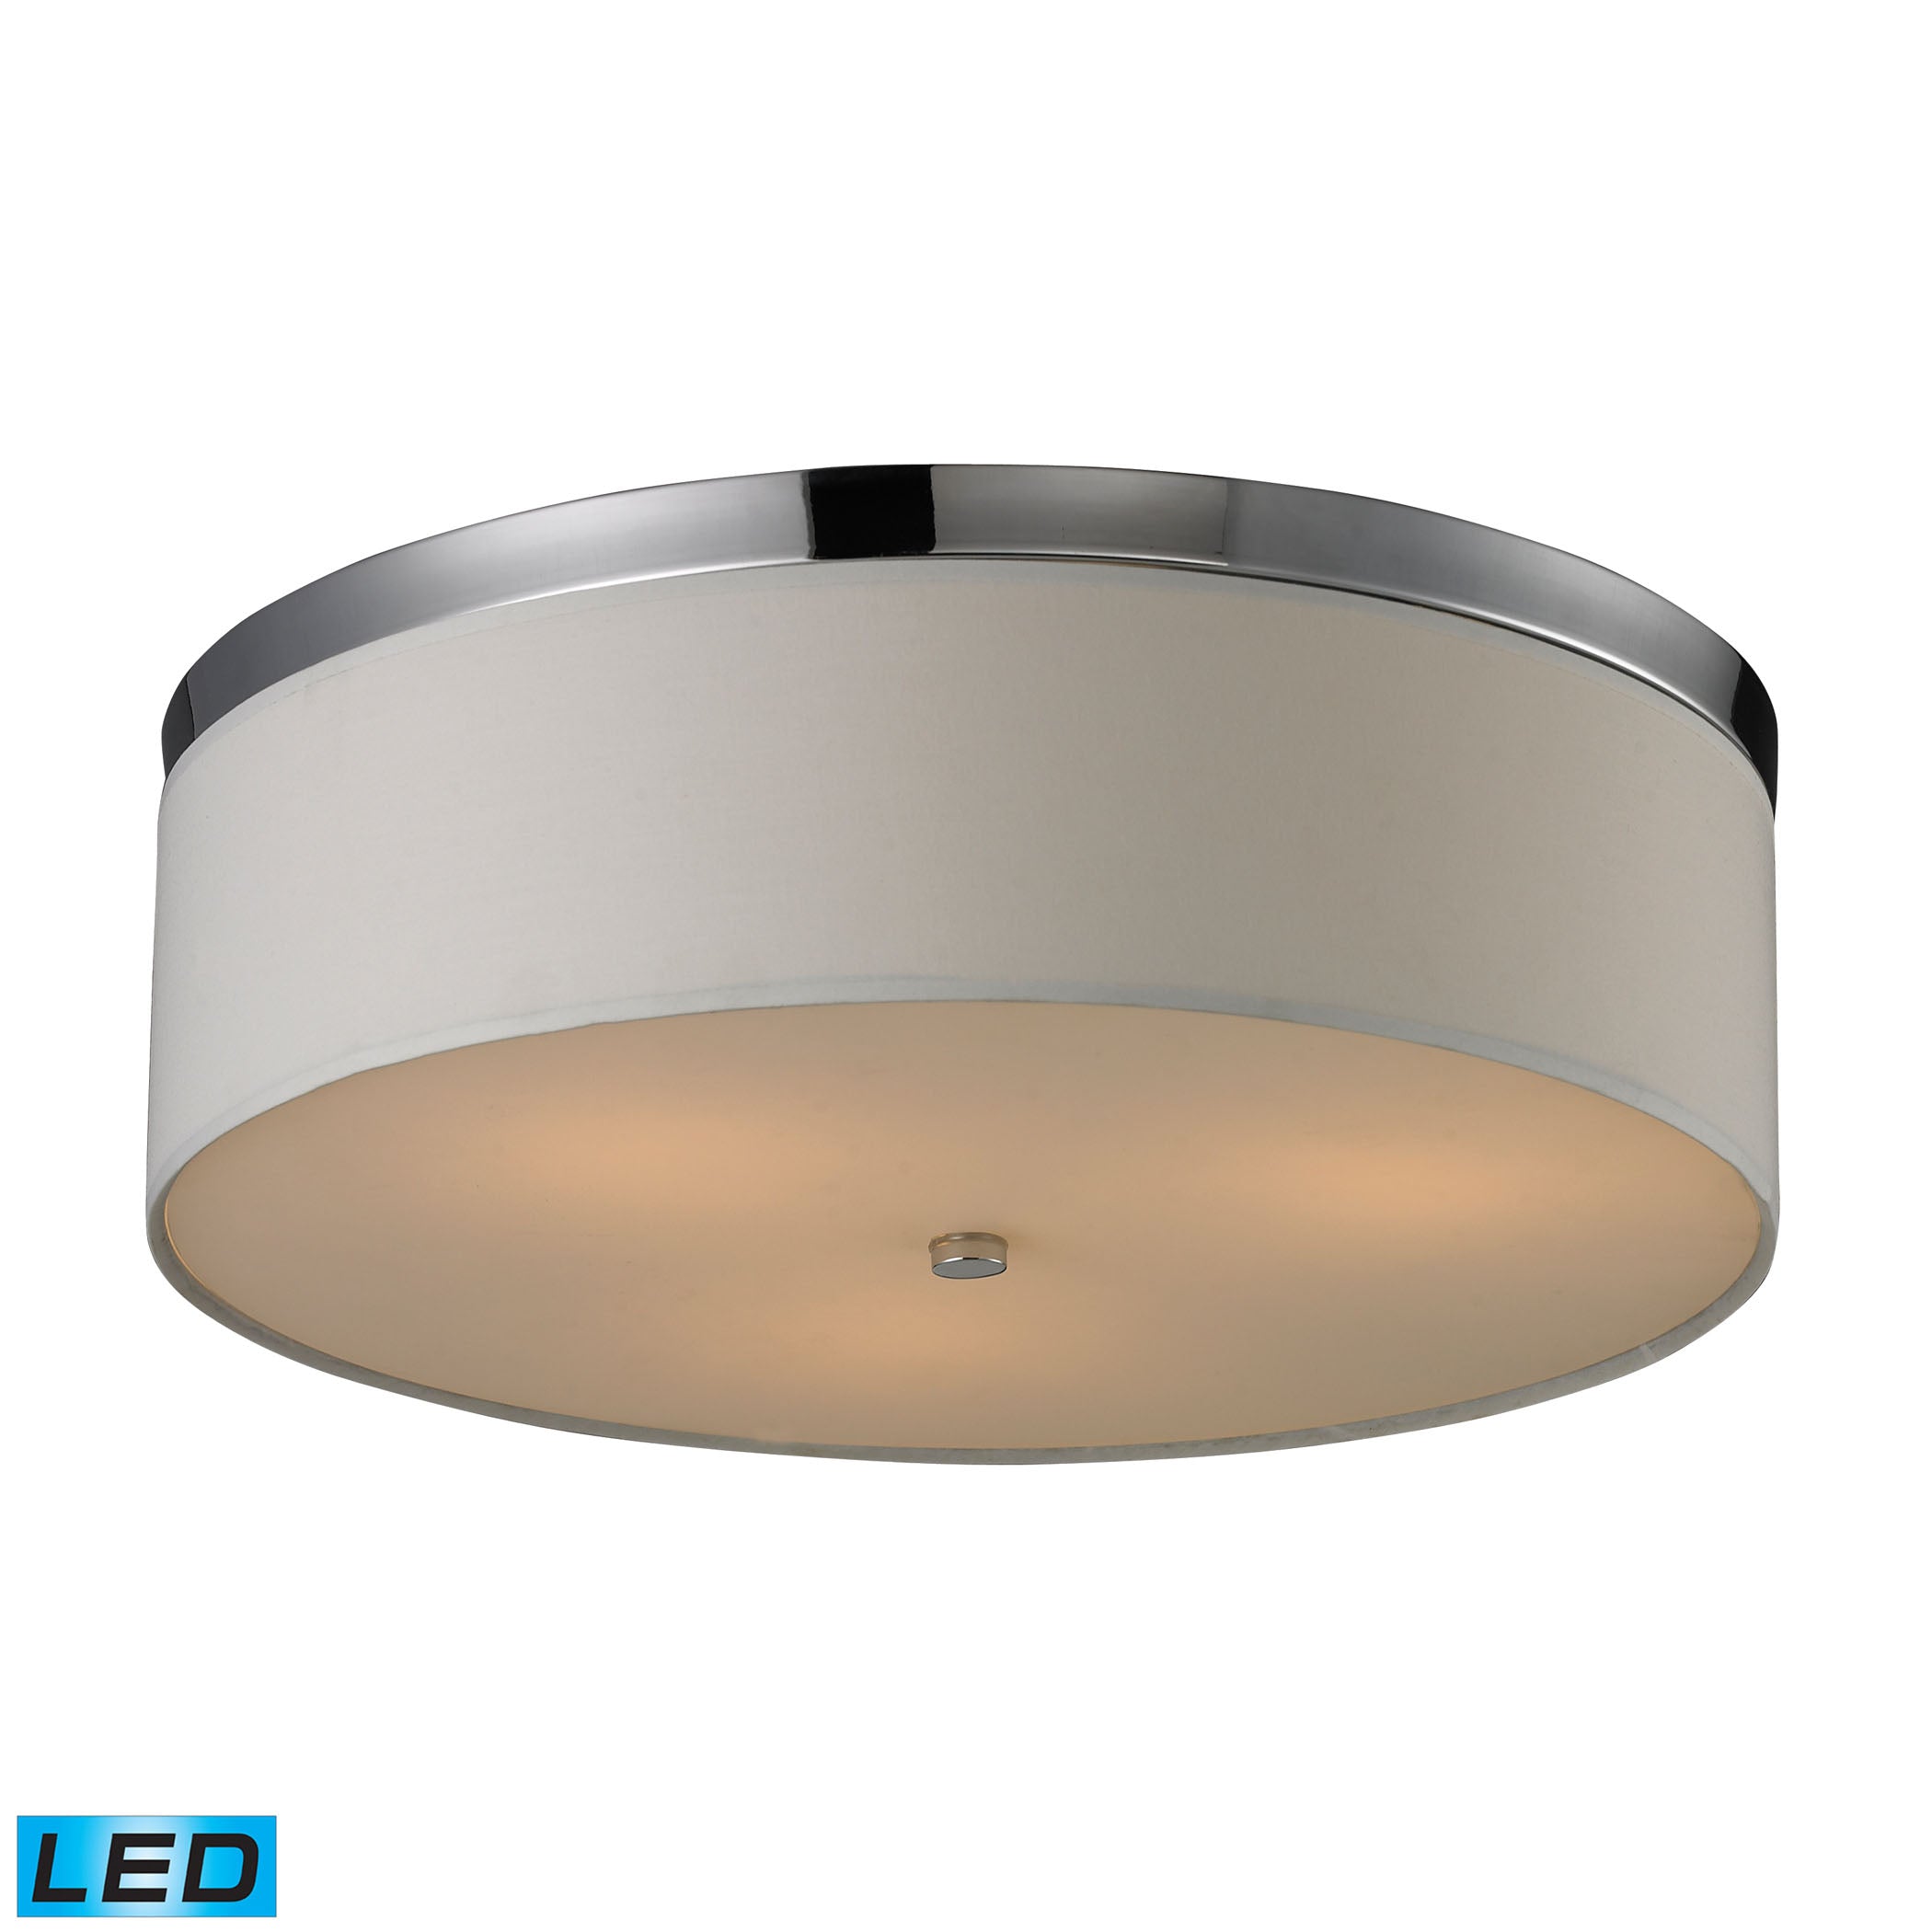 ELK Lighting 11445/3-LED Flushmounts 3-Light Flush Mount in Polished Chrome with Diffuser - Includes LED Bulbs